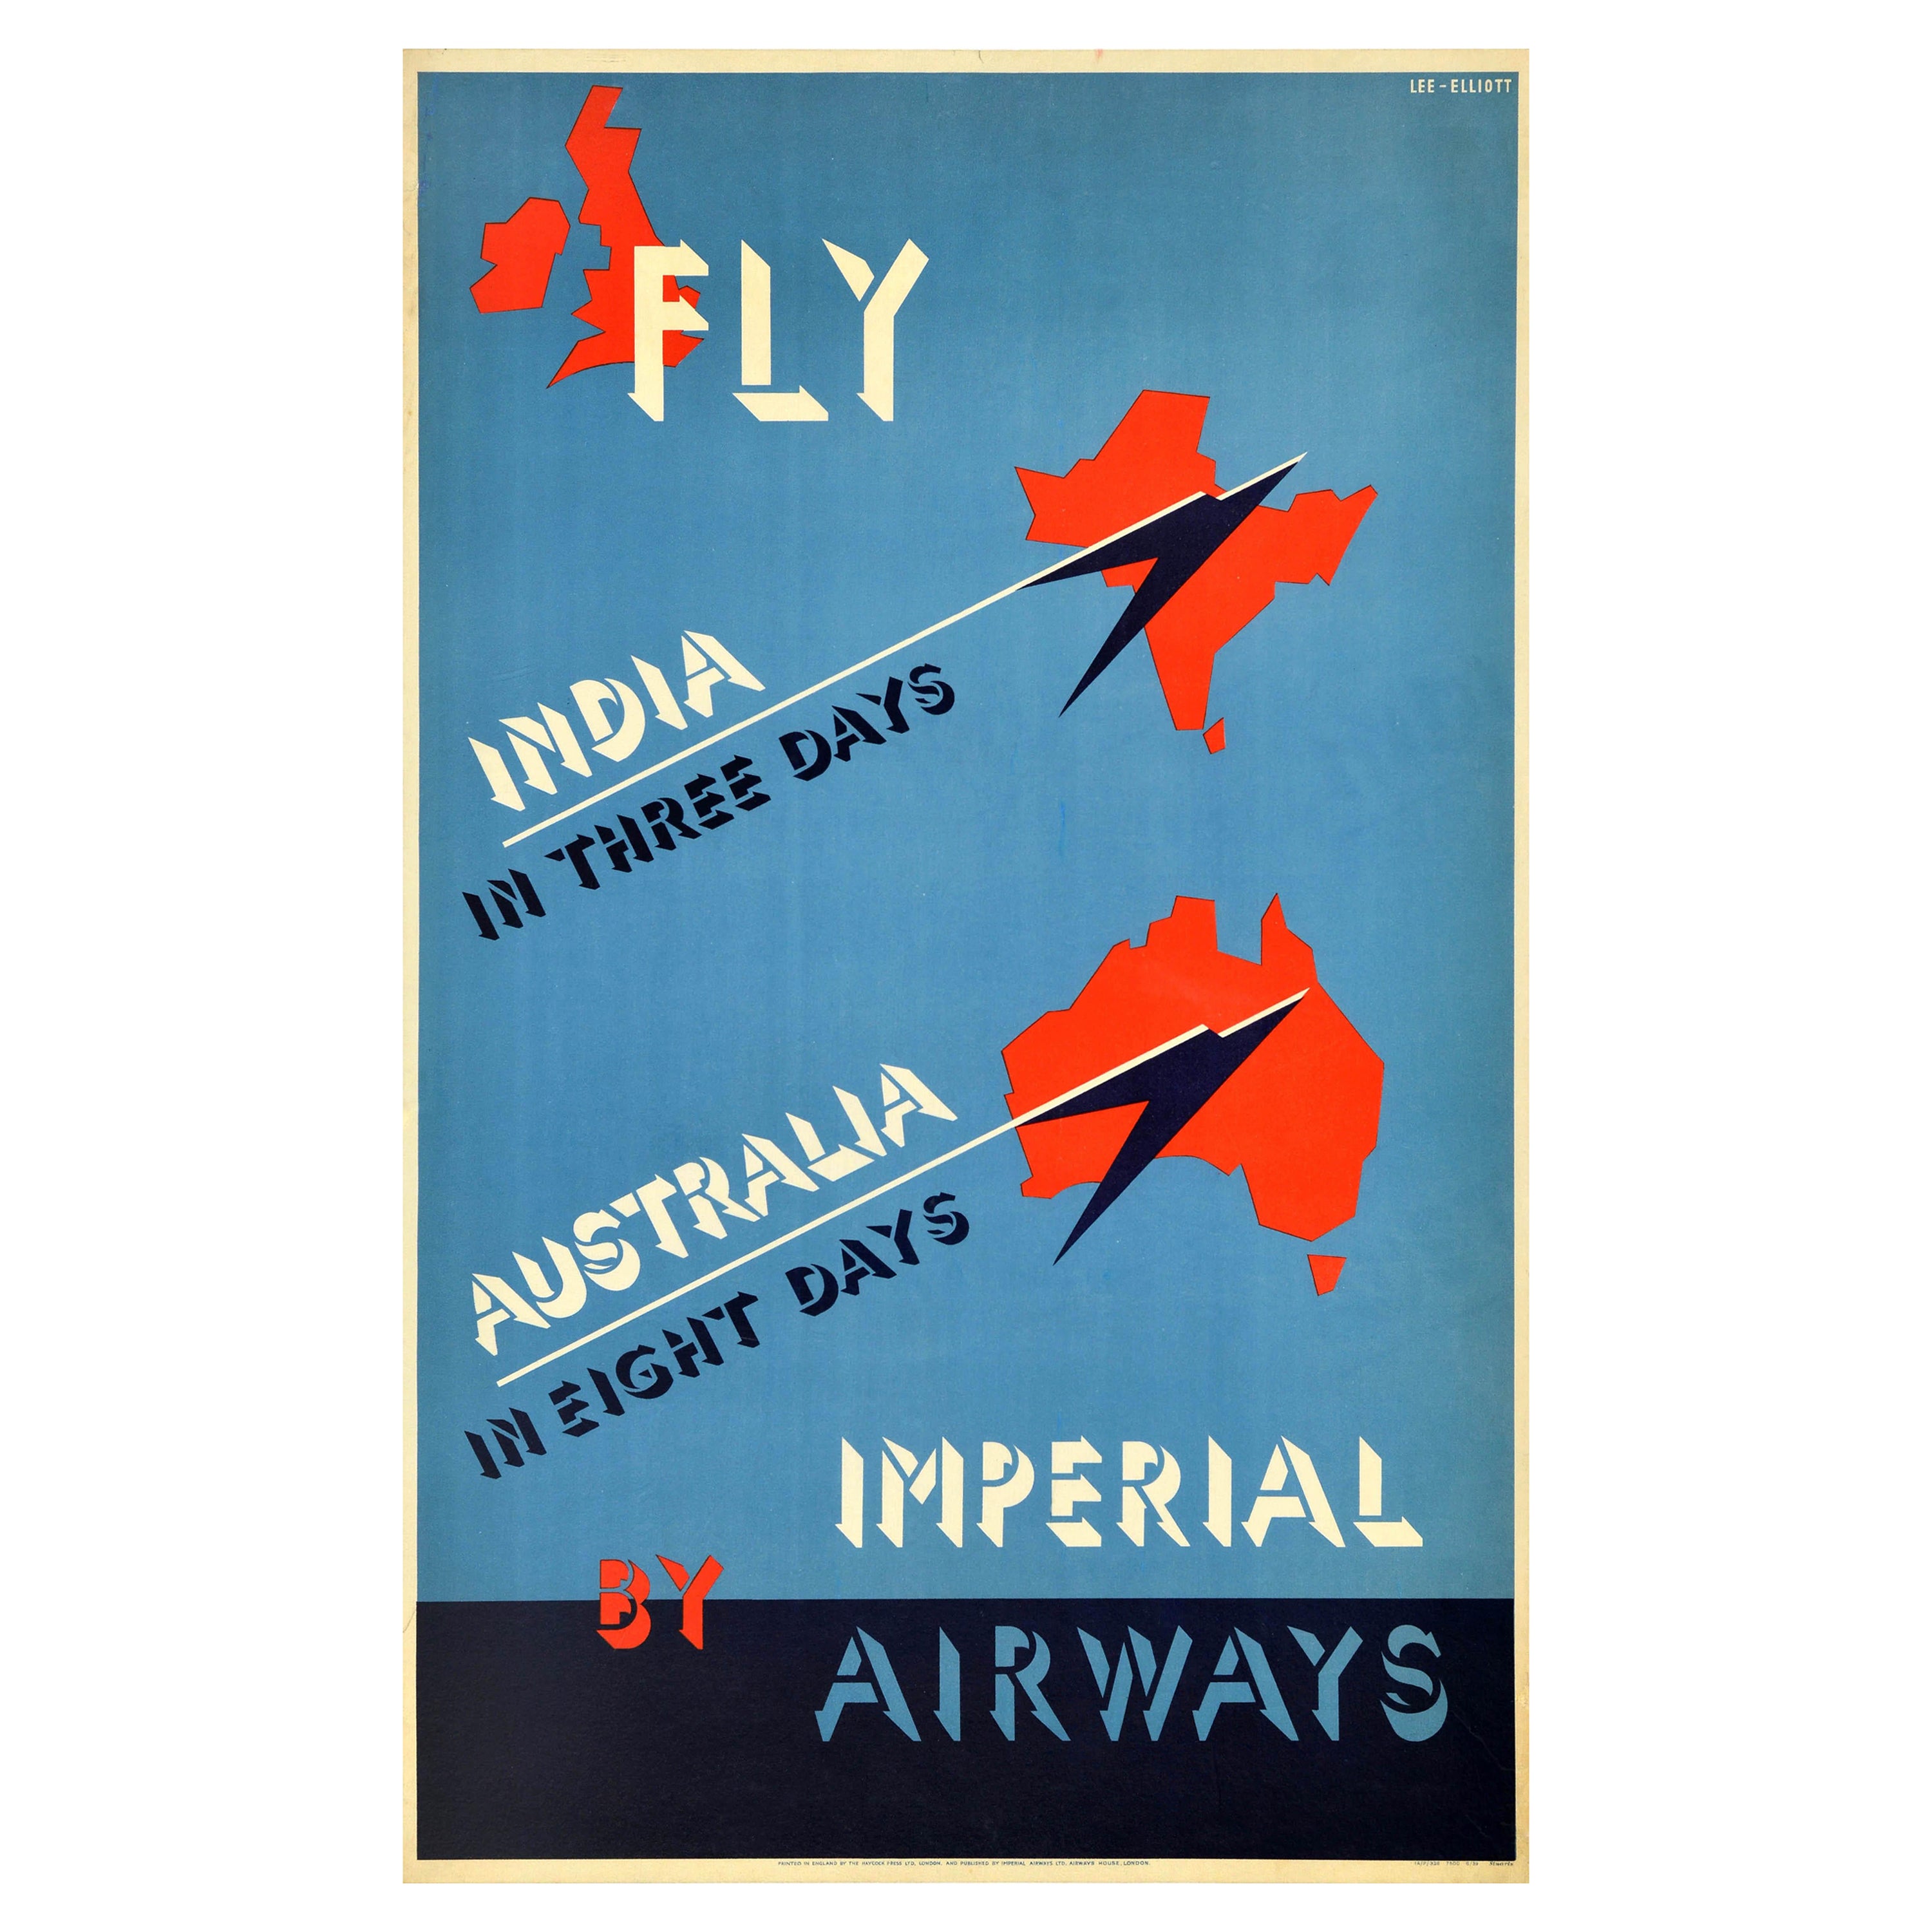 Affiche publicitaire originale de voyage Fly Imperial Airways, Inde, Australie